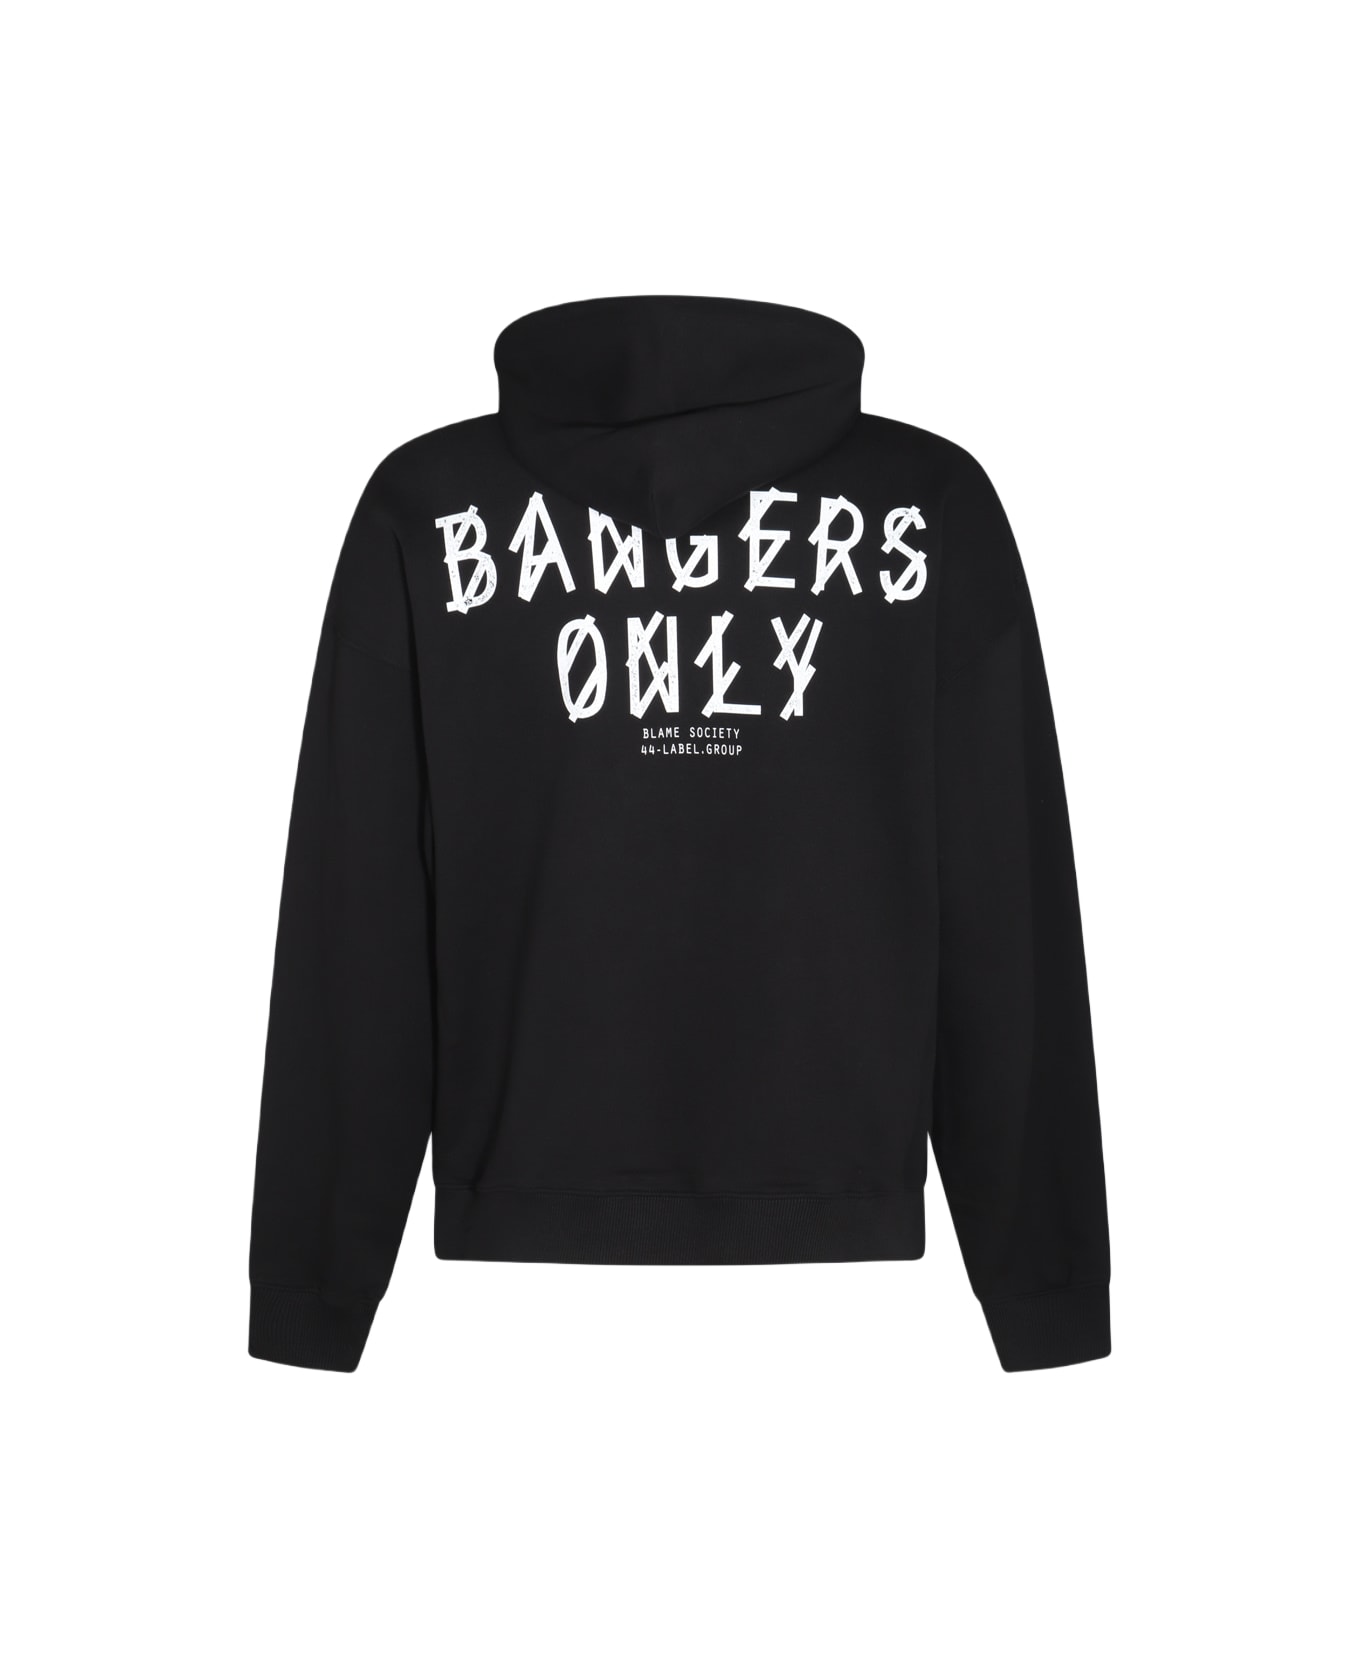 44 Label Group Black Cotton Bangers Sweatshirt - Black